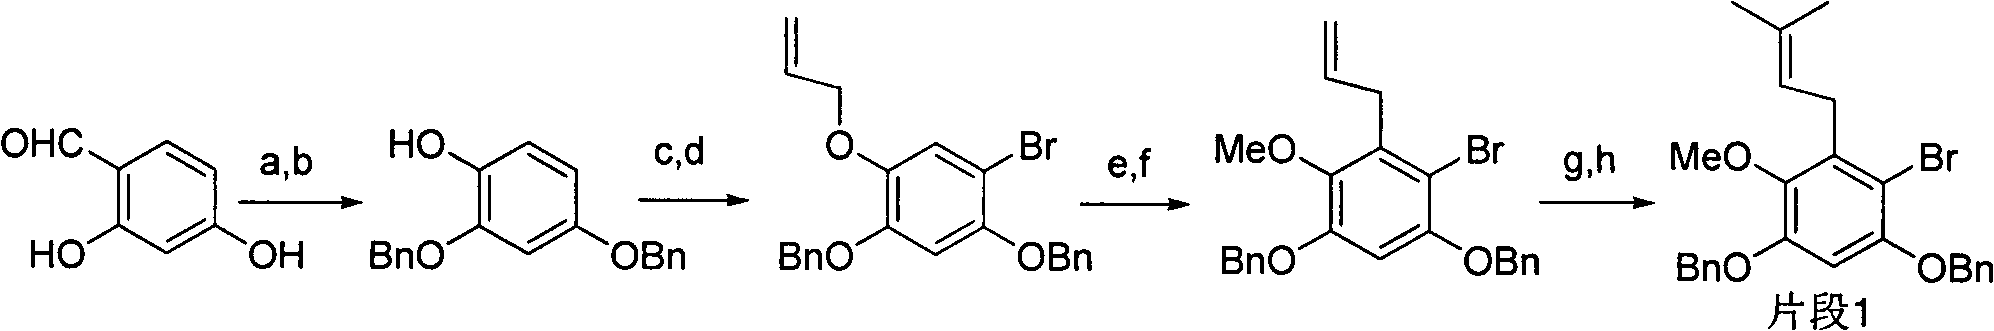 Total synthesis method of mangostin